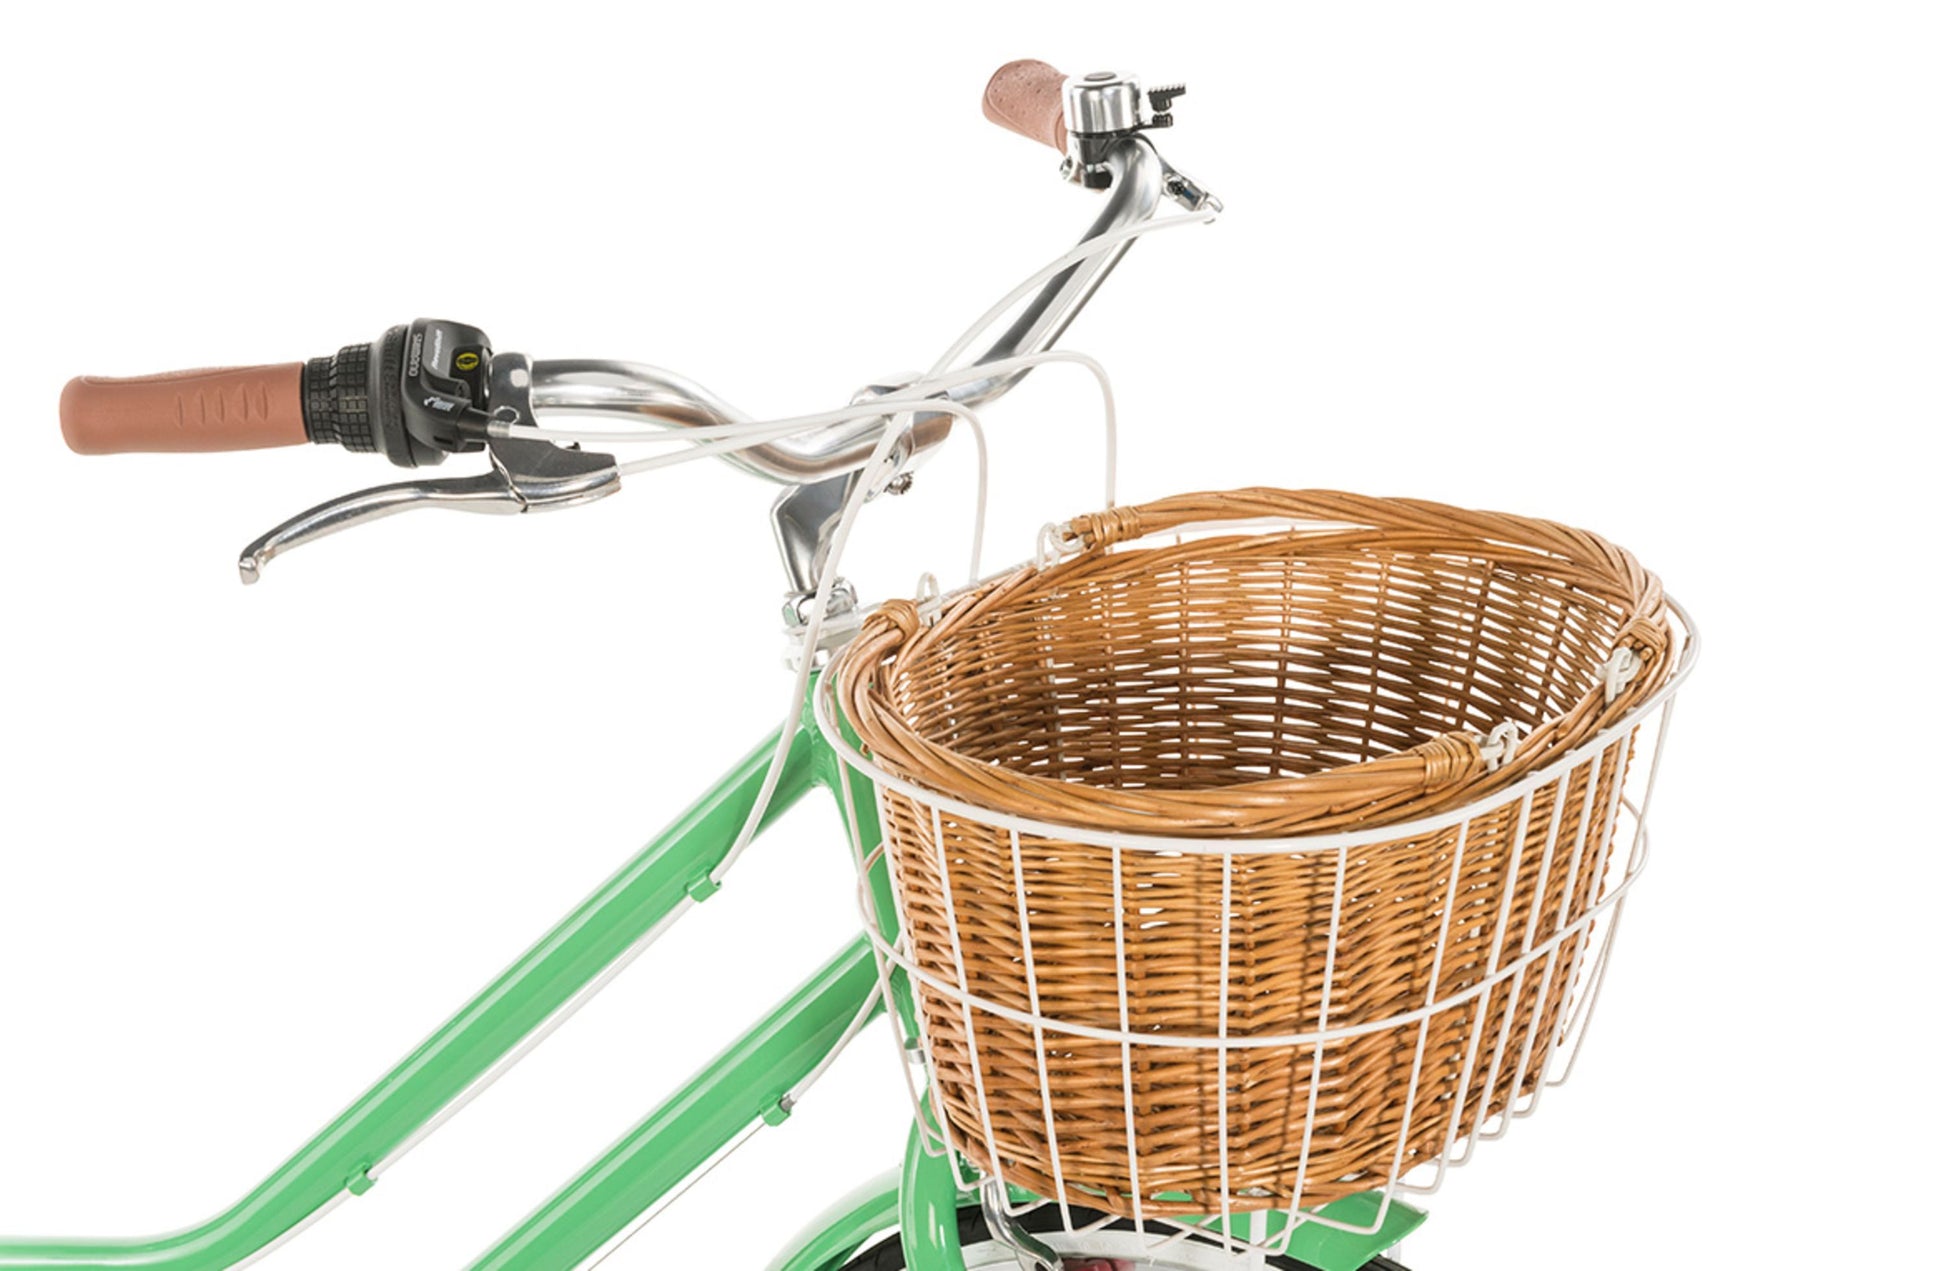 Ladies Lite Vintage Bike in Mint Green showing front basket from Reid Cycles Australia